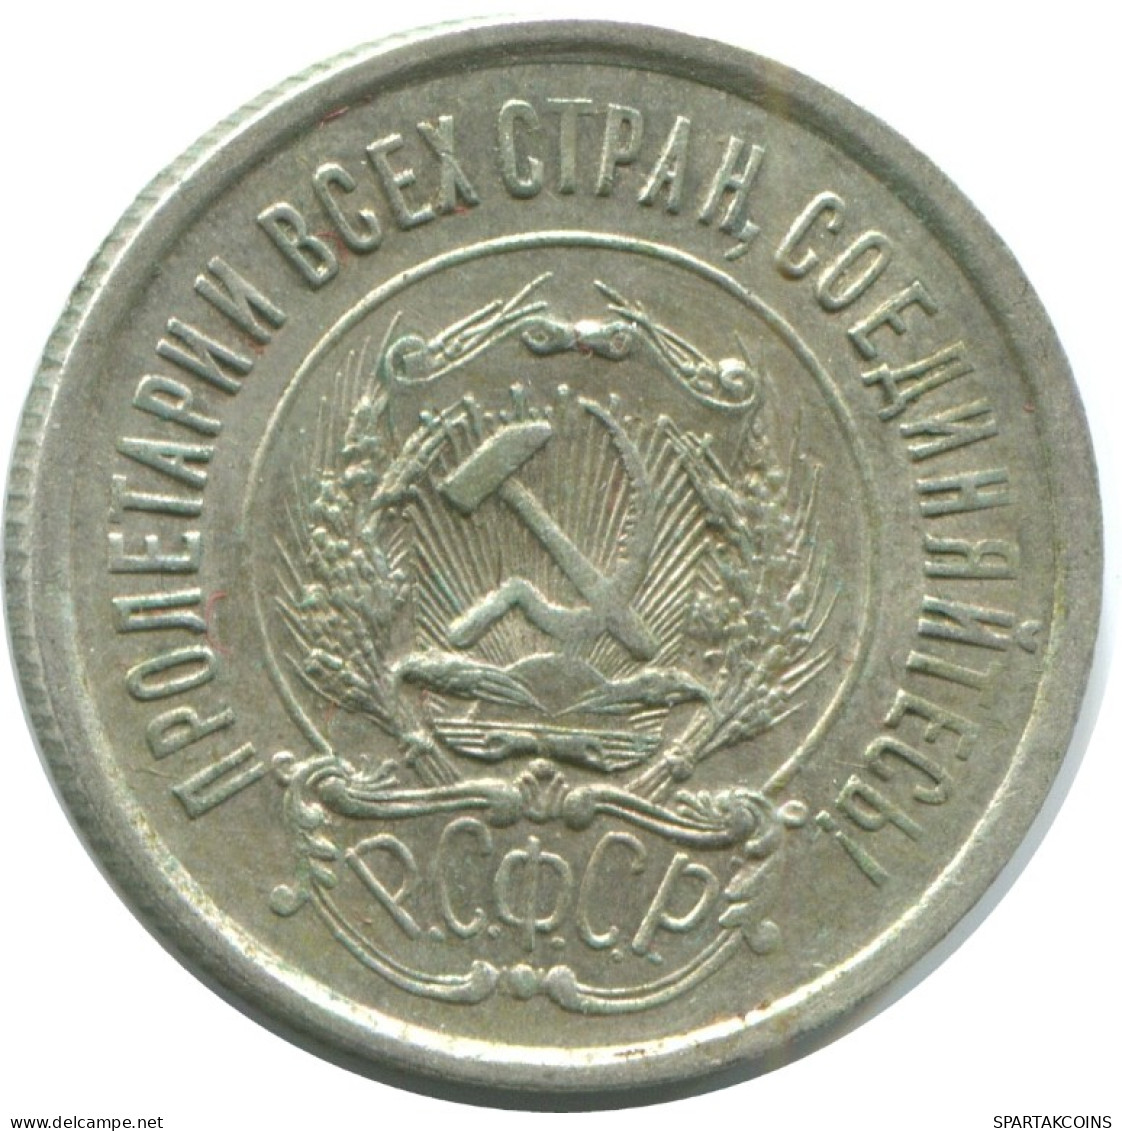 20 KOPEKS 1923 RUSSIA RSFSR SILVER Coin HIGH GRADE #AF460.4.U.A - Russia